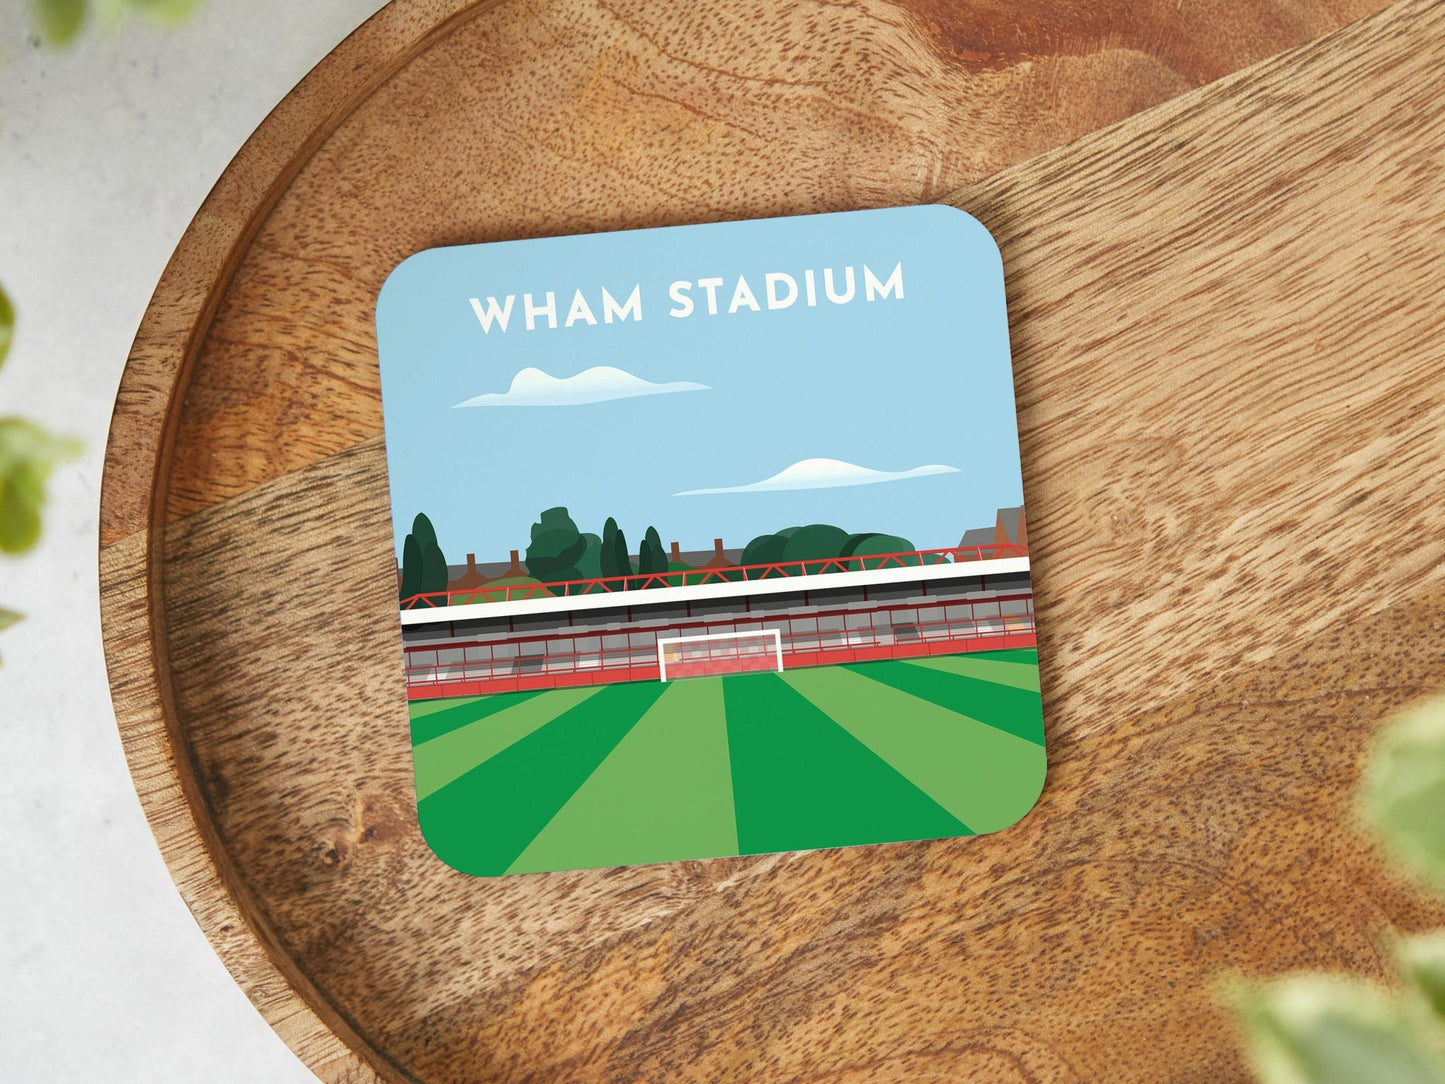 Accrington Stanley Coaster Gift with Illustration of Football Stadium, Wham Stadium, The Crown Ground, Beer Mat, Soccer Memento - Turf Football Art